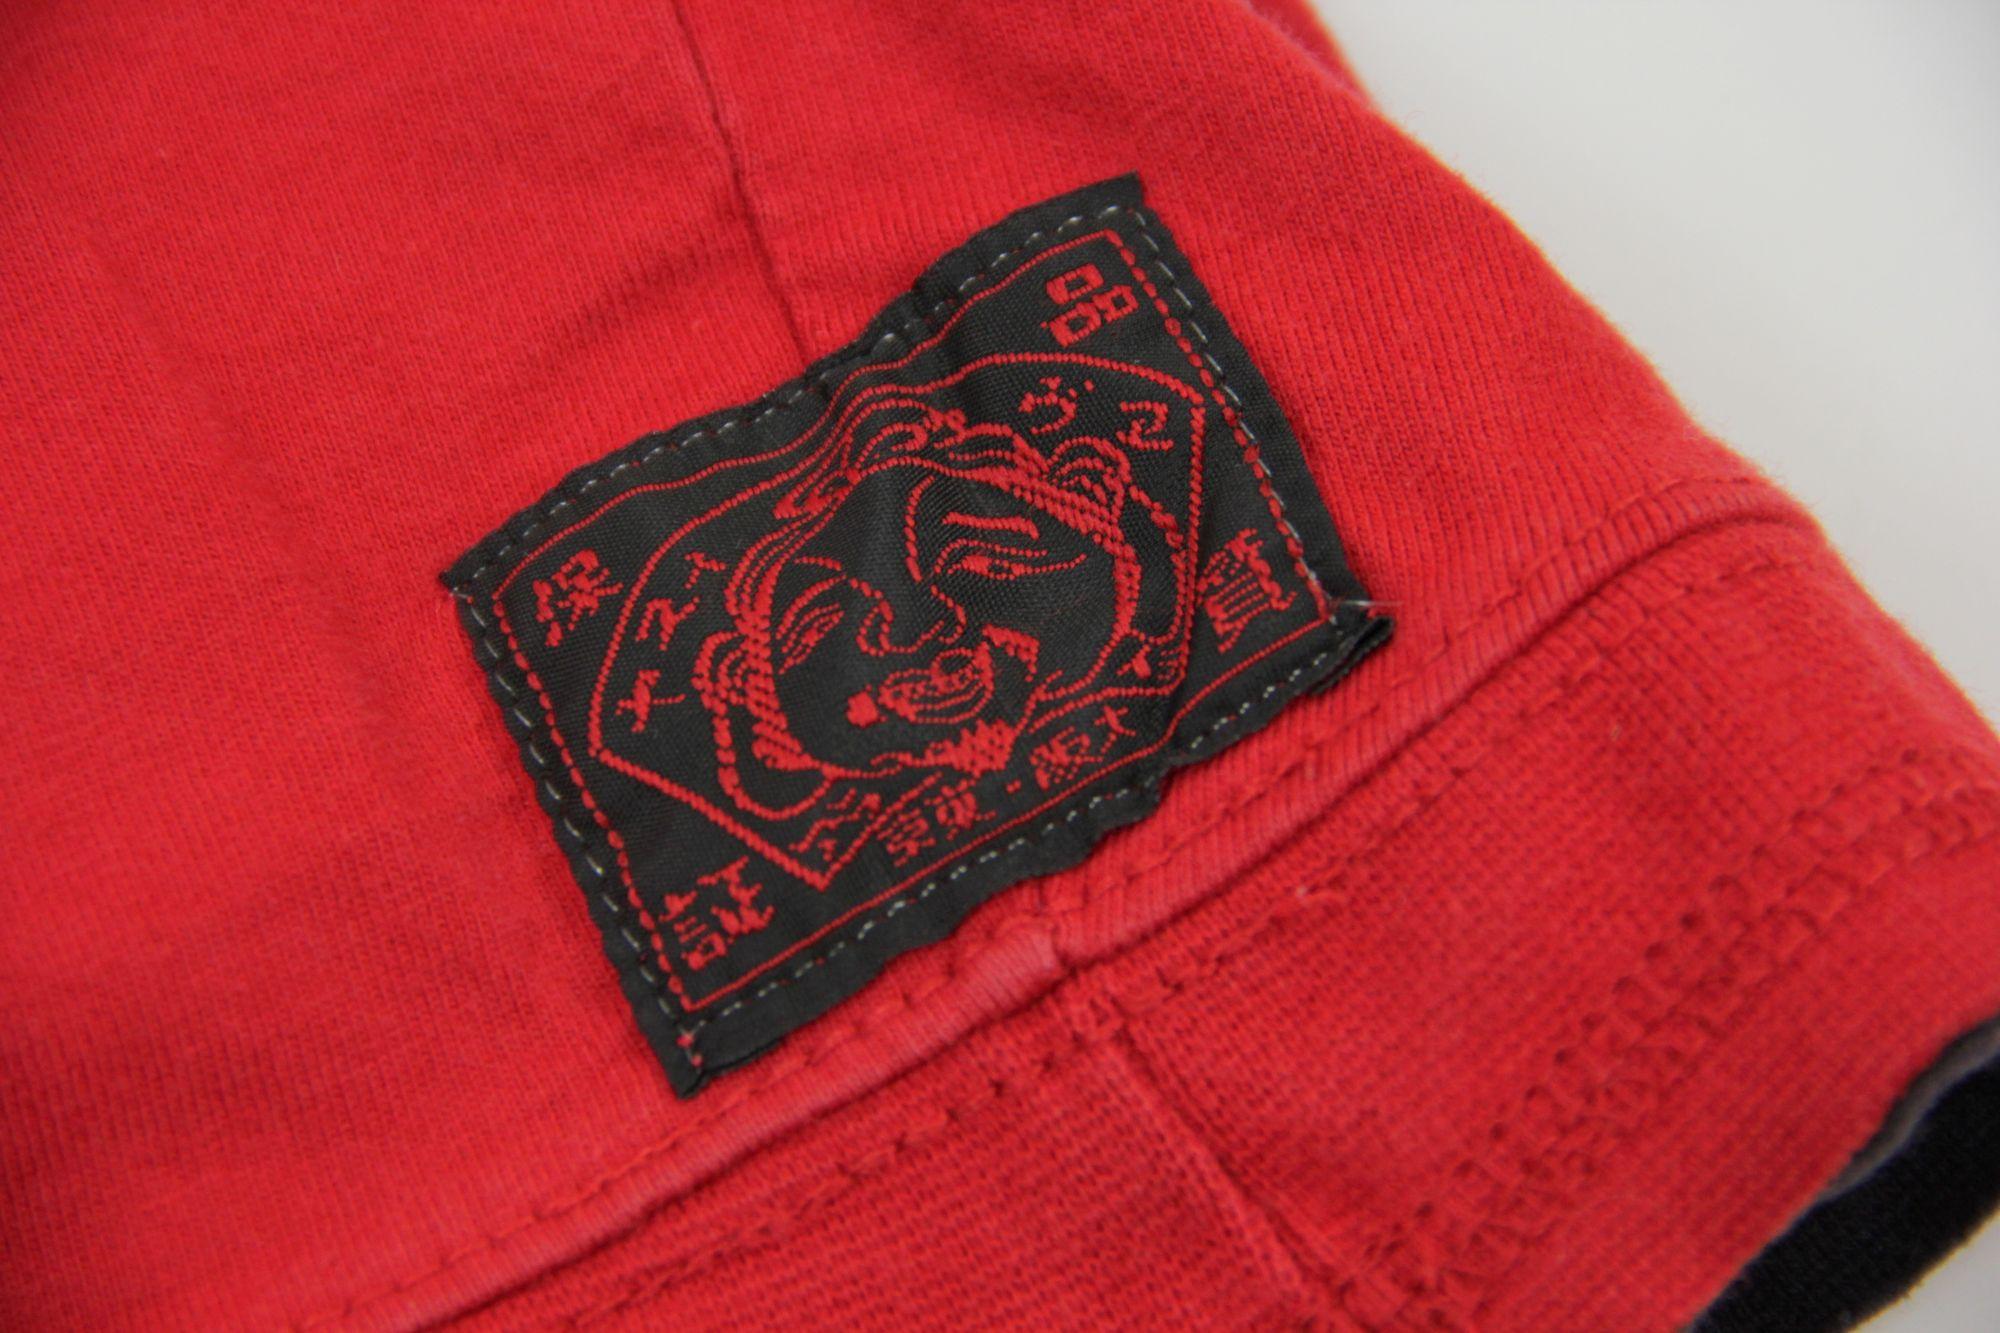 Evisu Vintage Red T-shirt, Size M